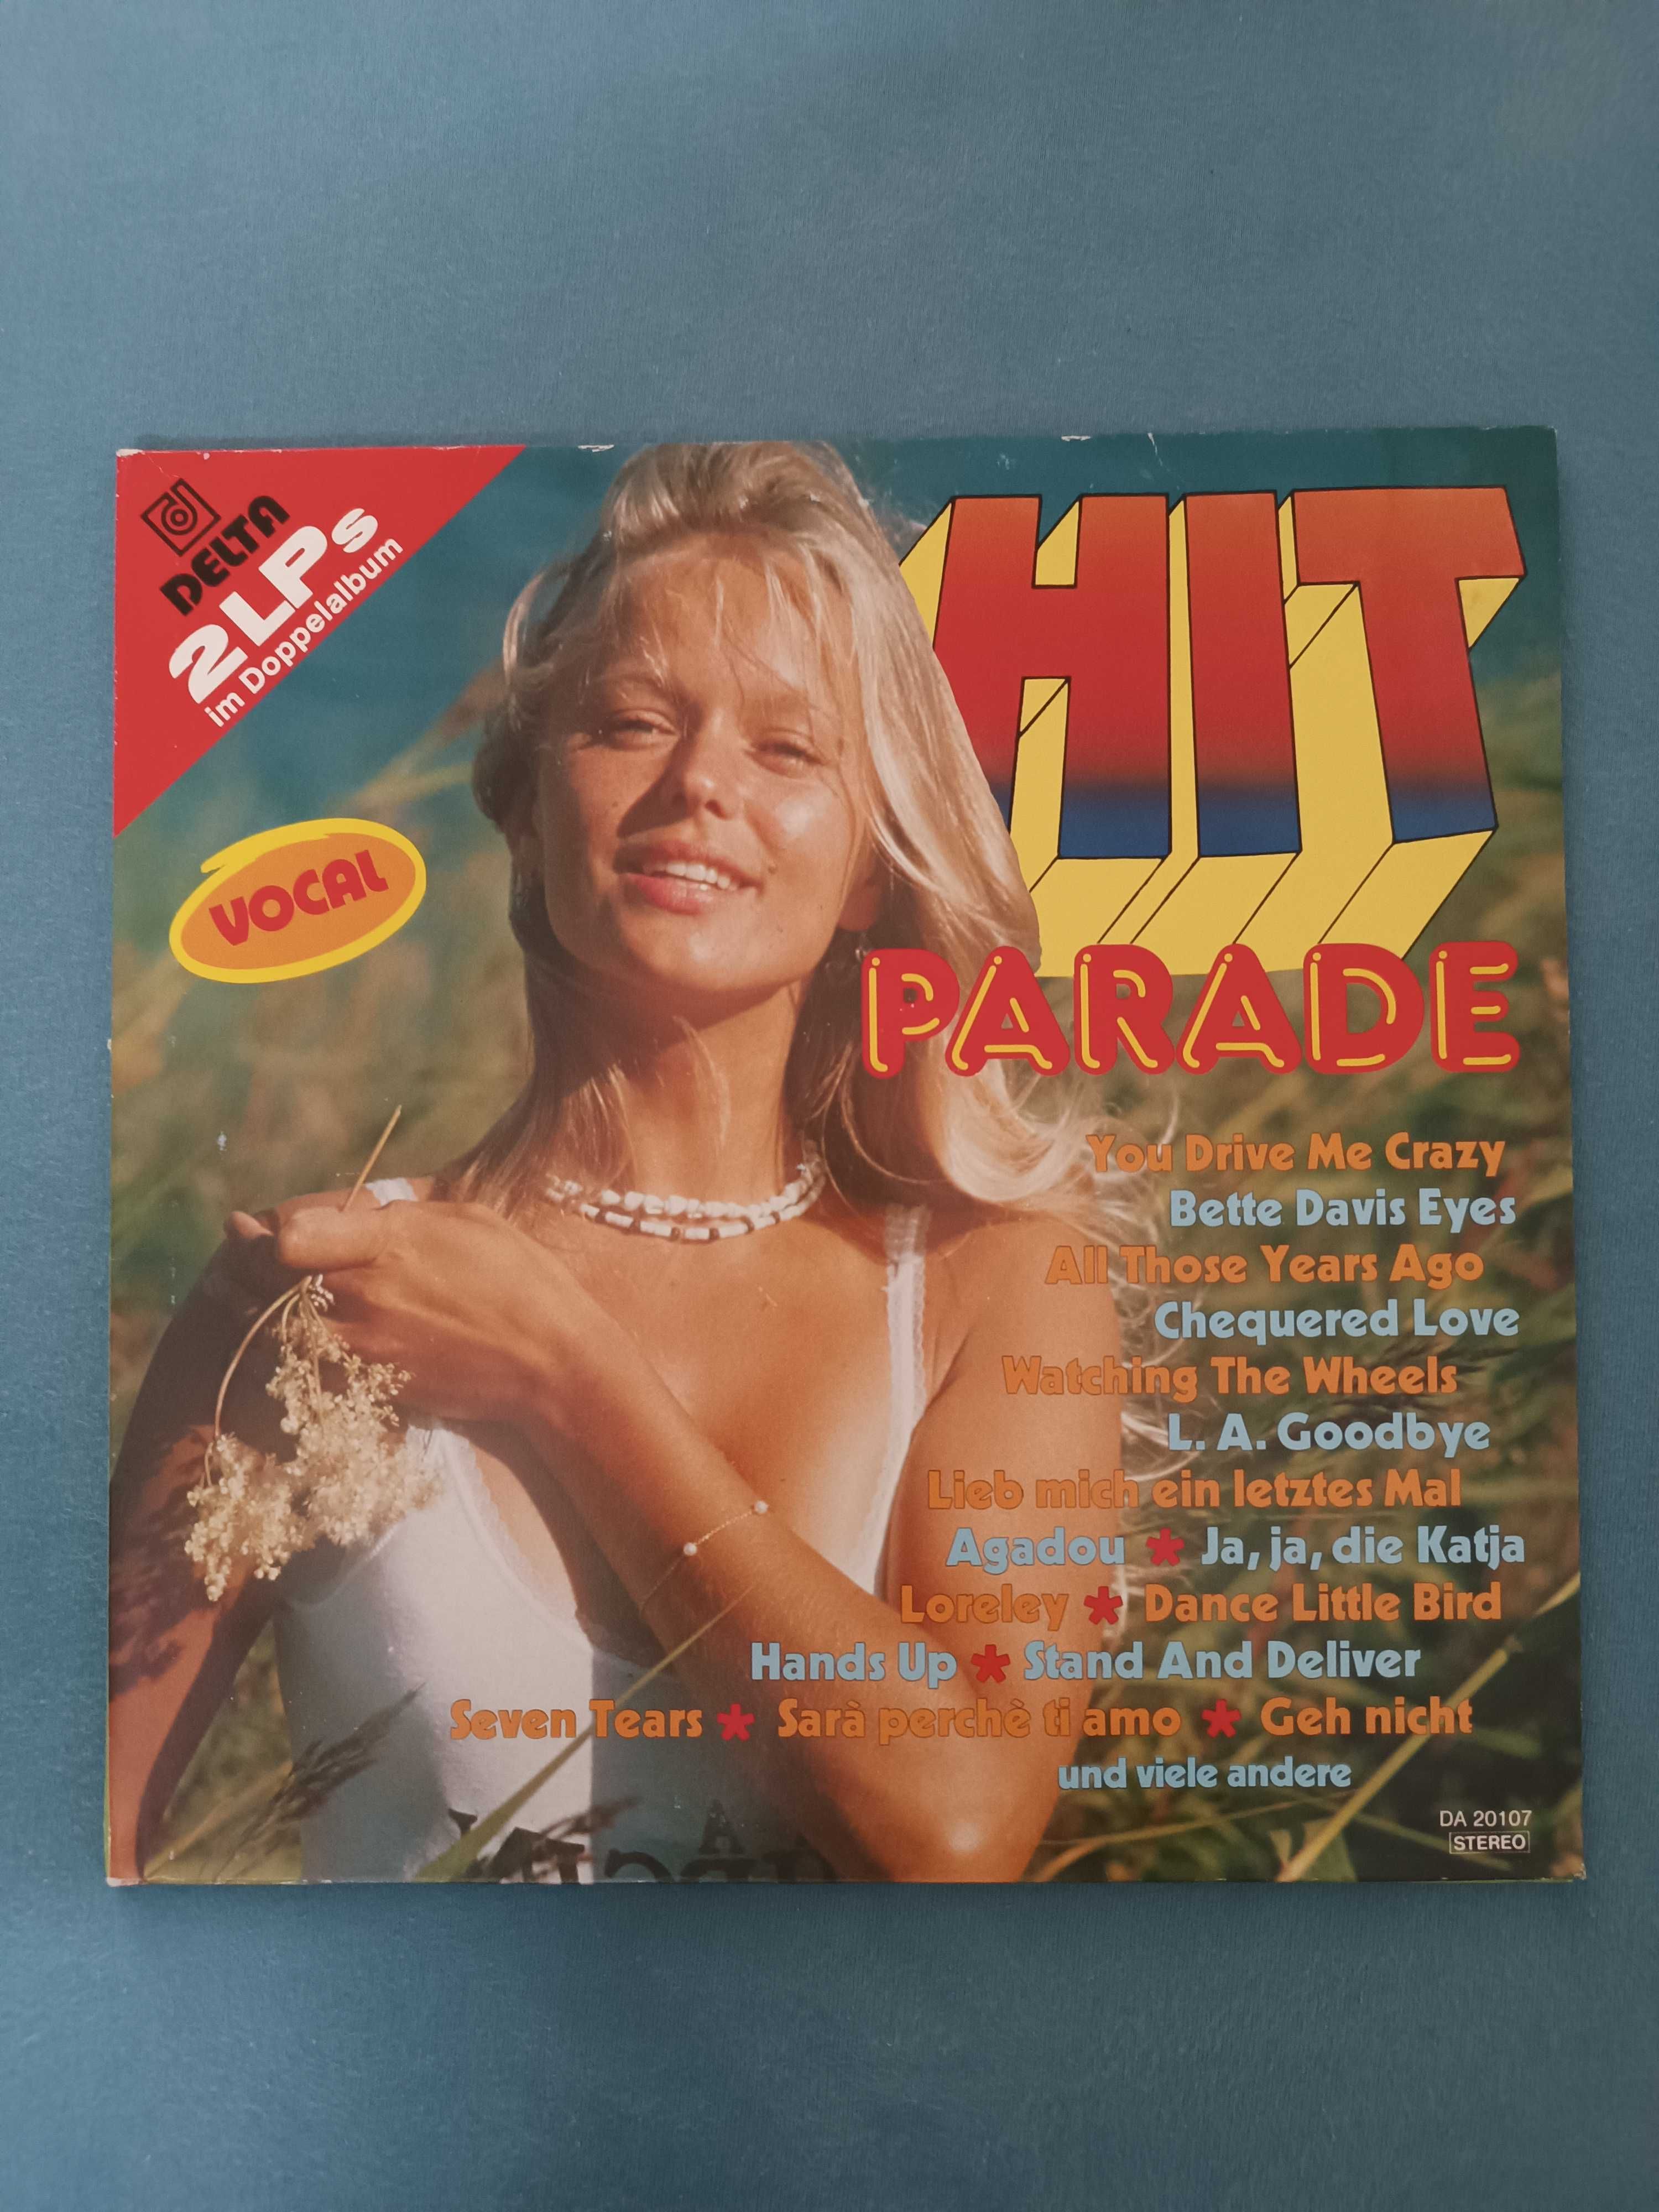 2 LP / Hit Parade - cover version DA20107 vinyl